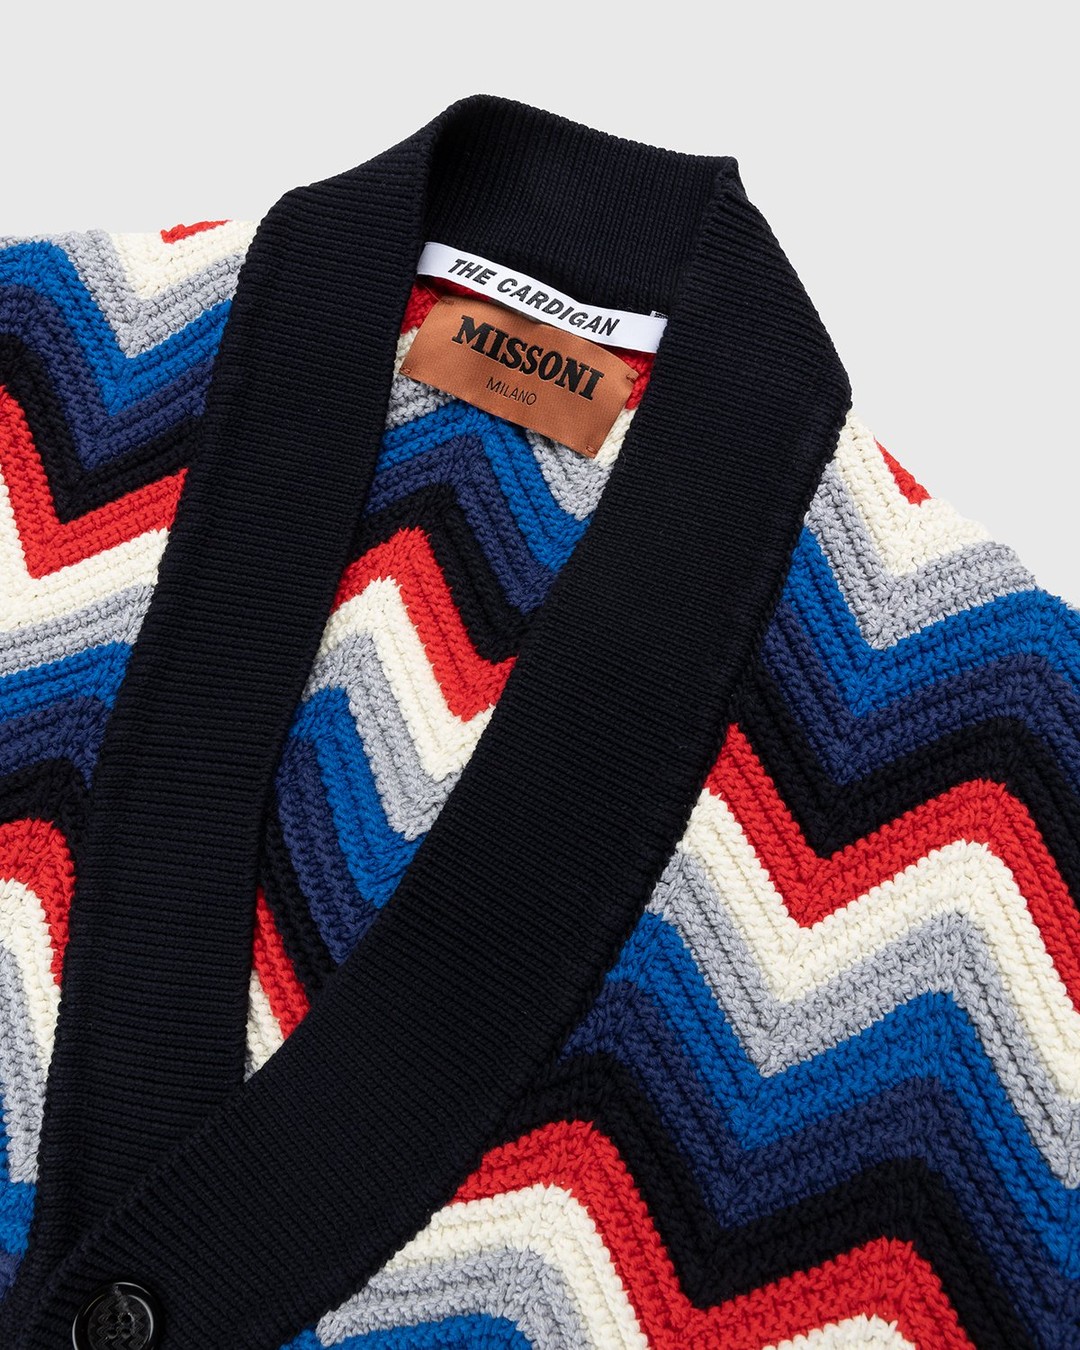 Missoni – Wavy Cotton Cardigan Multi - Knitwear - Multi - Image 3